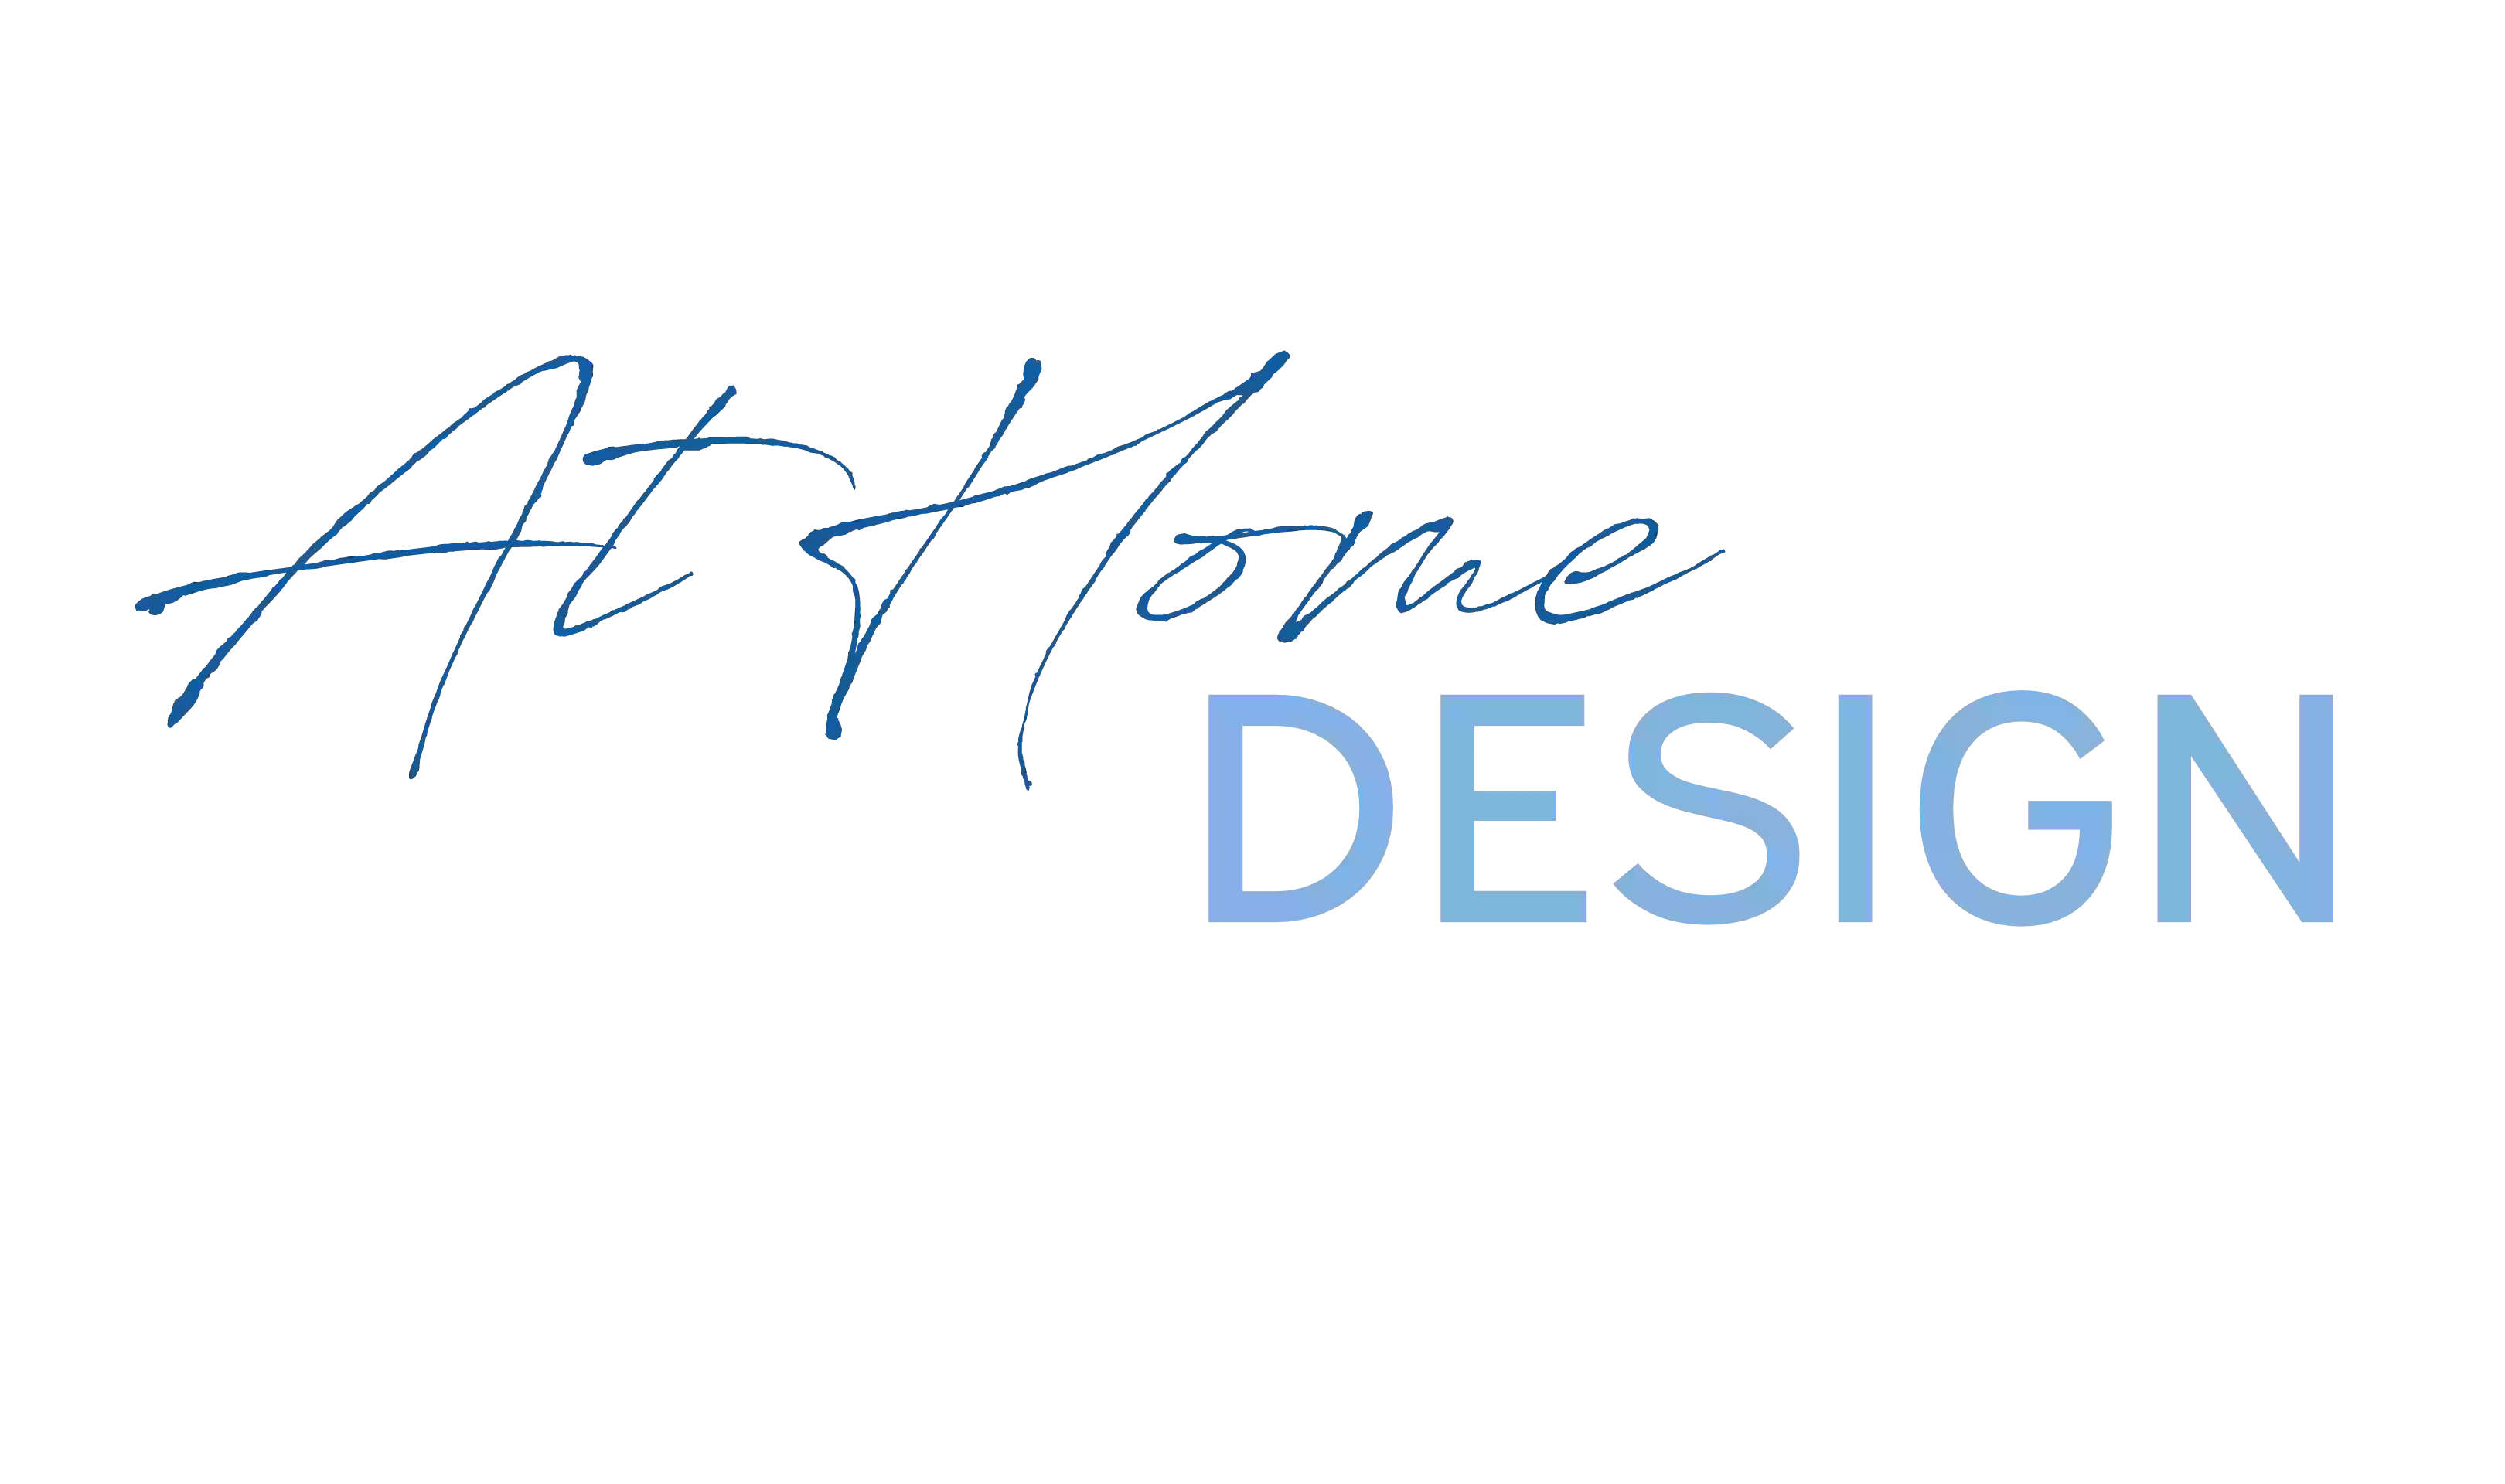 At Home Design, Inc